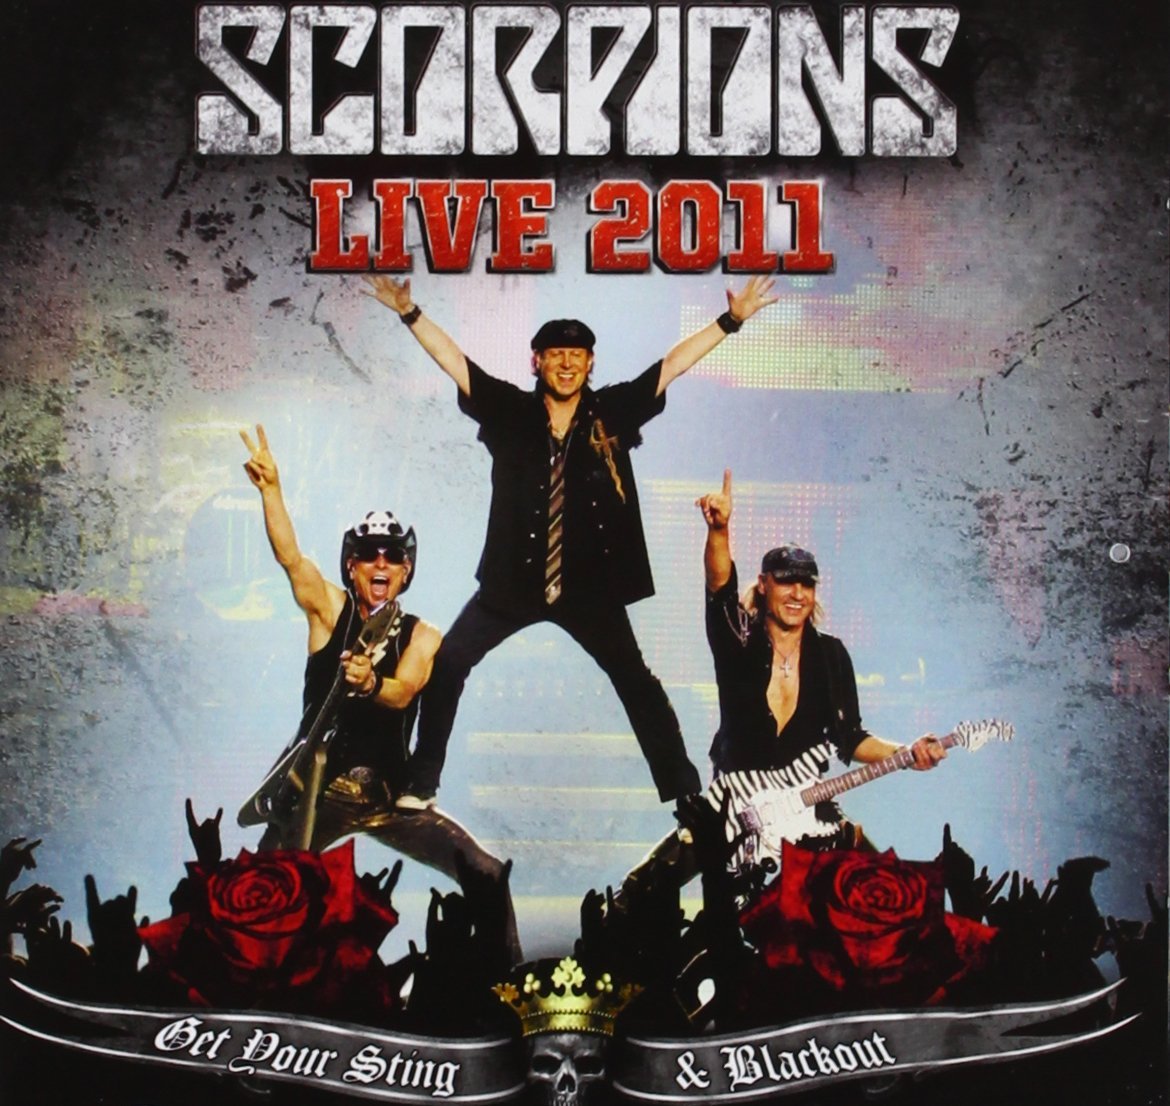 Justin Bieber Song and Music Free Download: Scorpions - Discografia Completa (MEGA)1170 x 1106